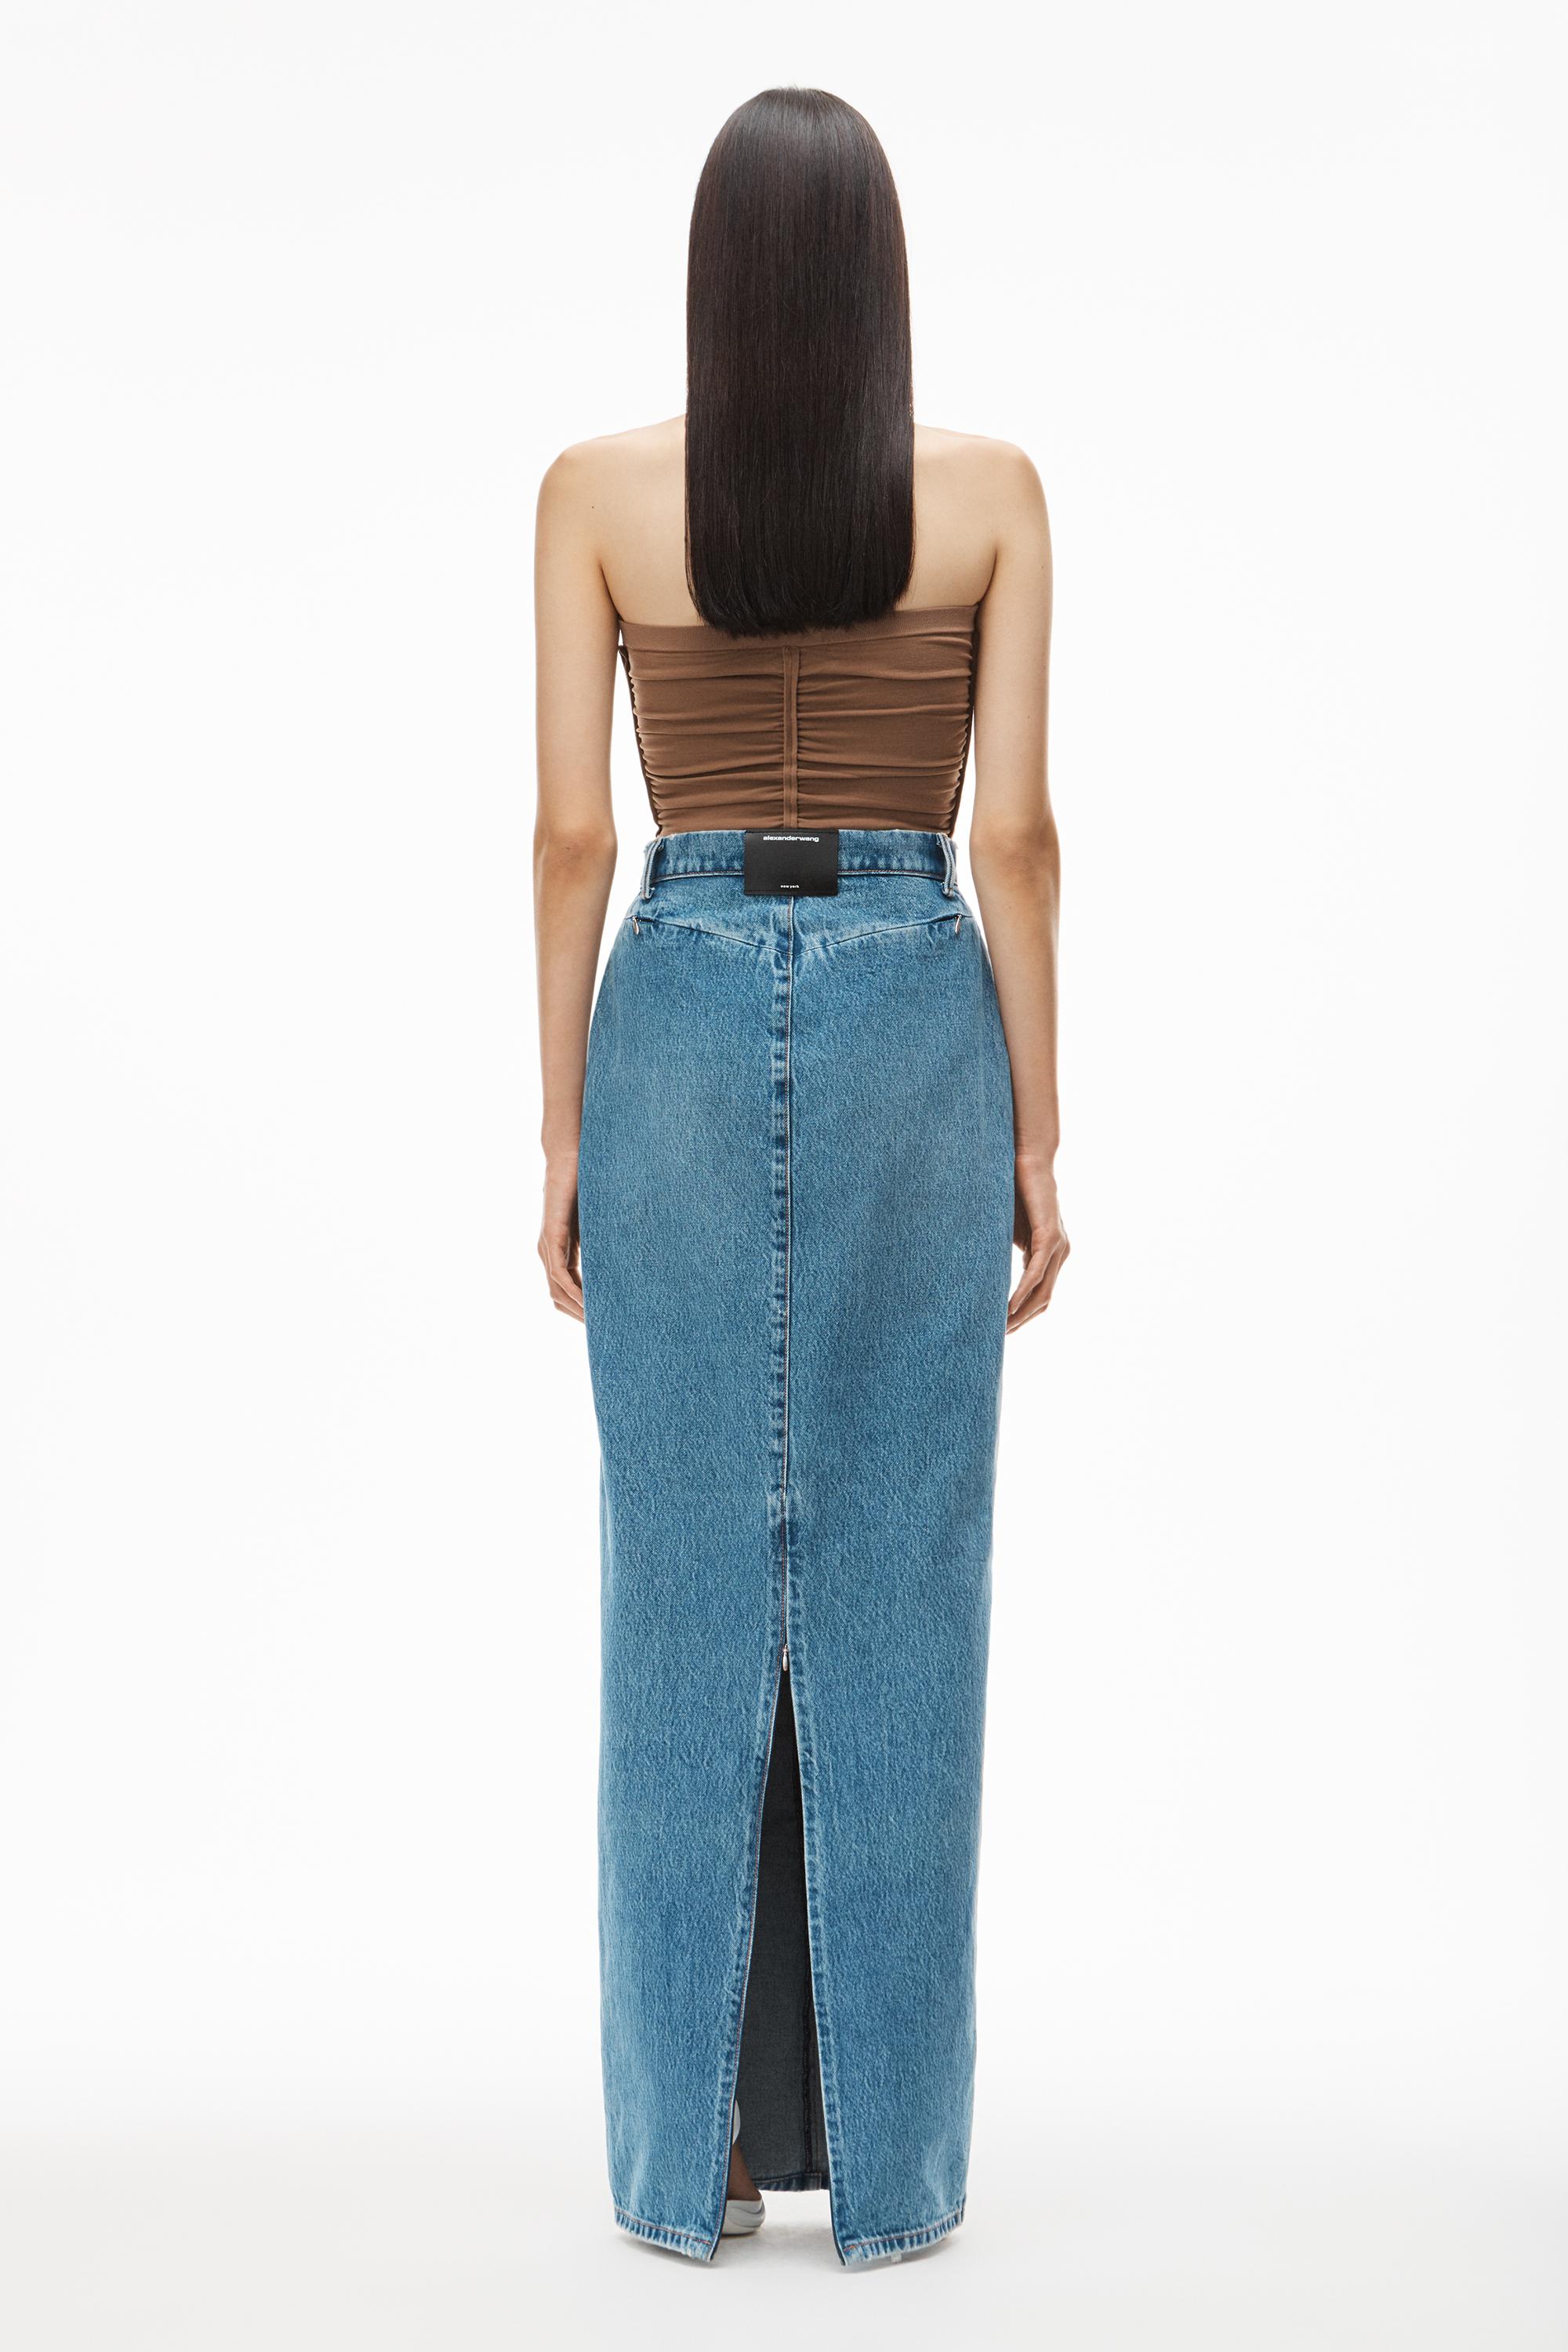 Alexander Wang Invisible Zip Maxi Skirt In Indigo Denim in Blue | Lyst